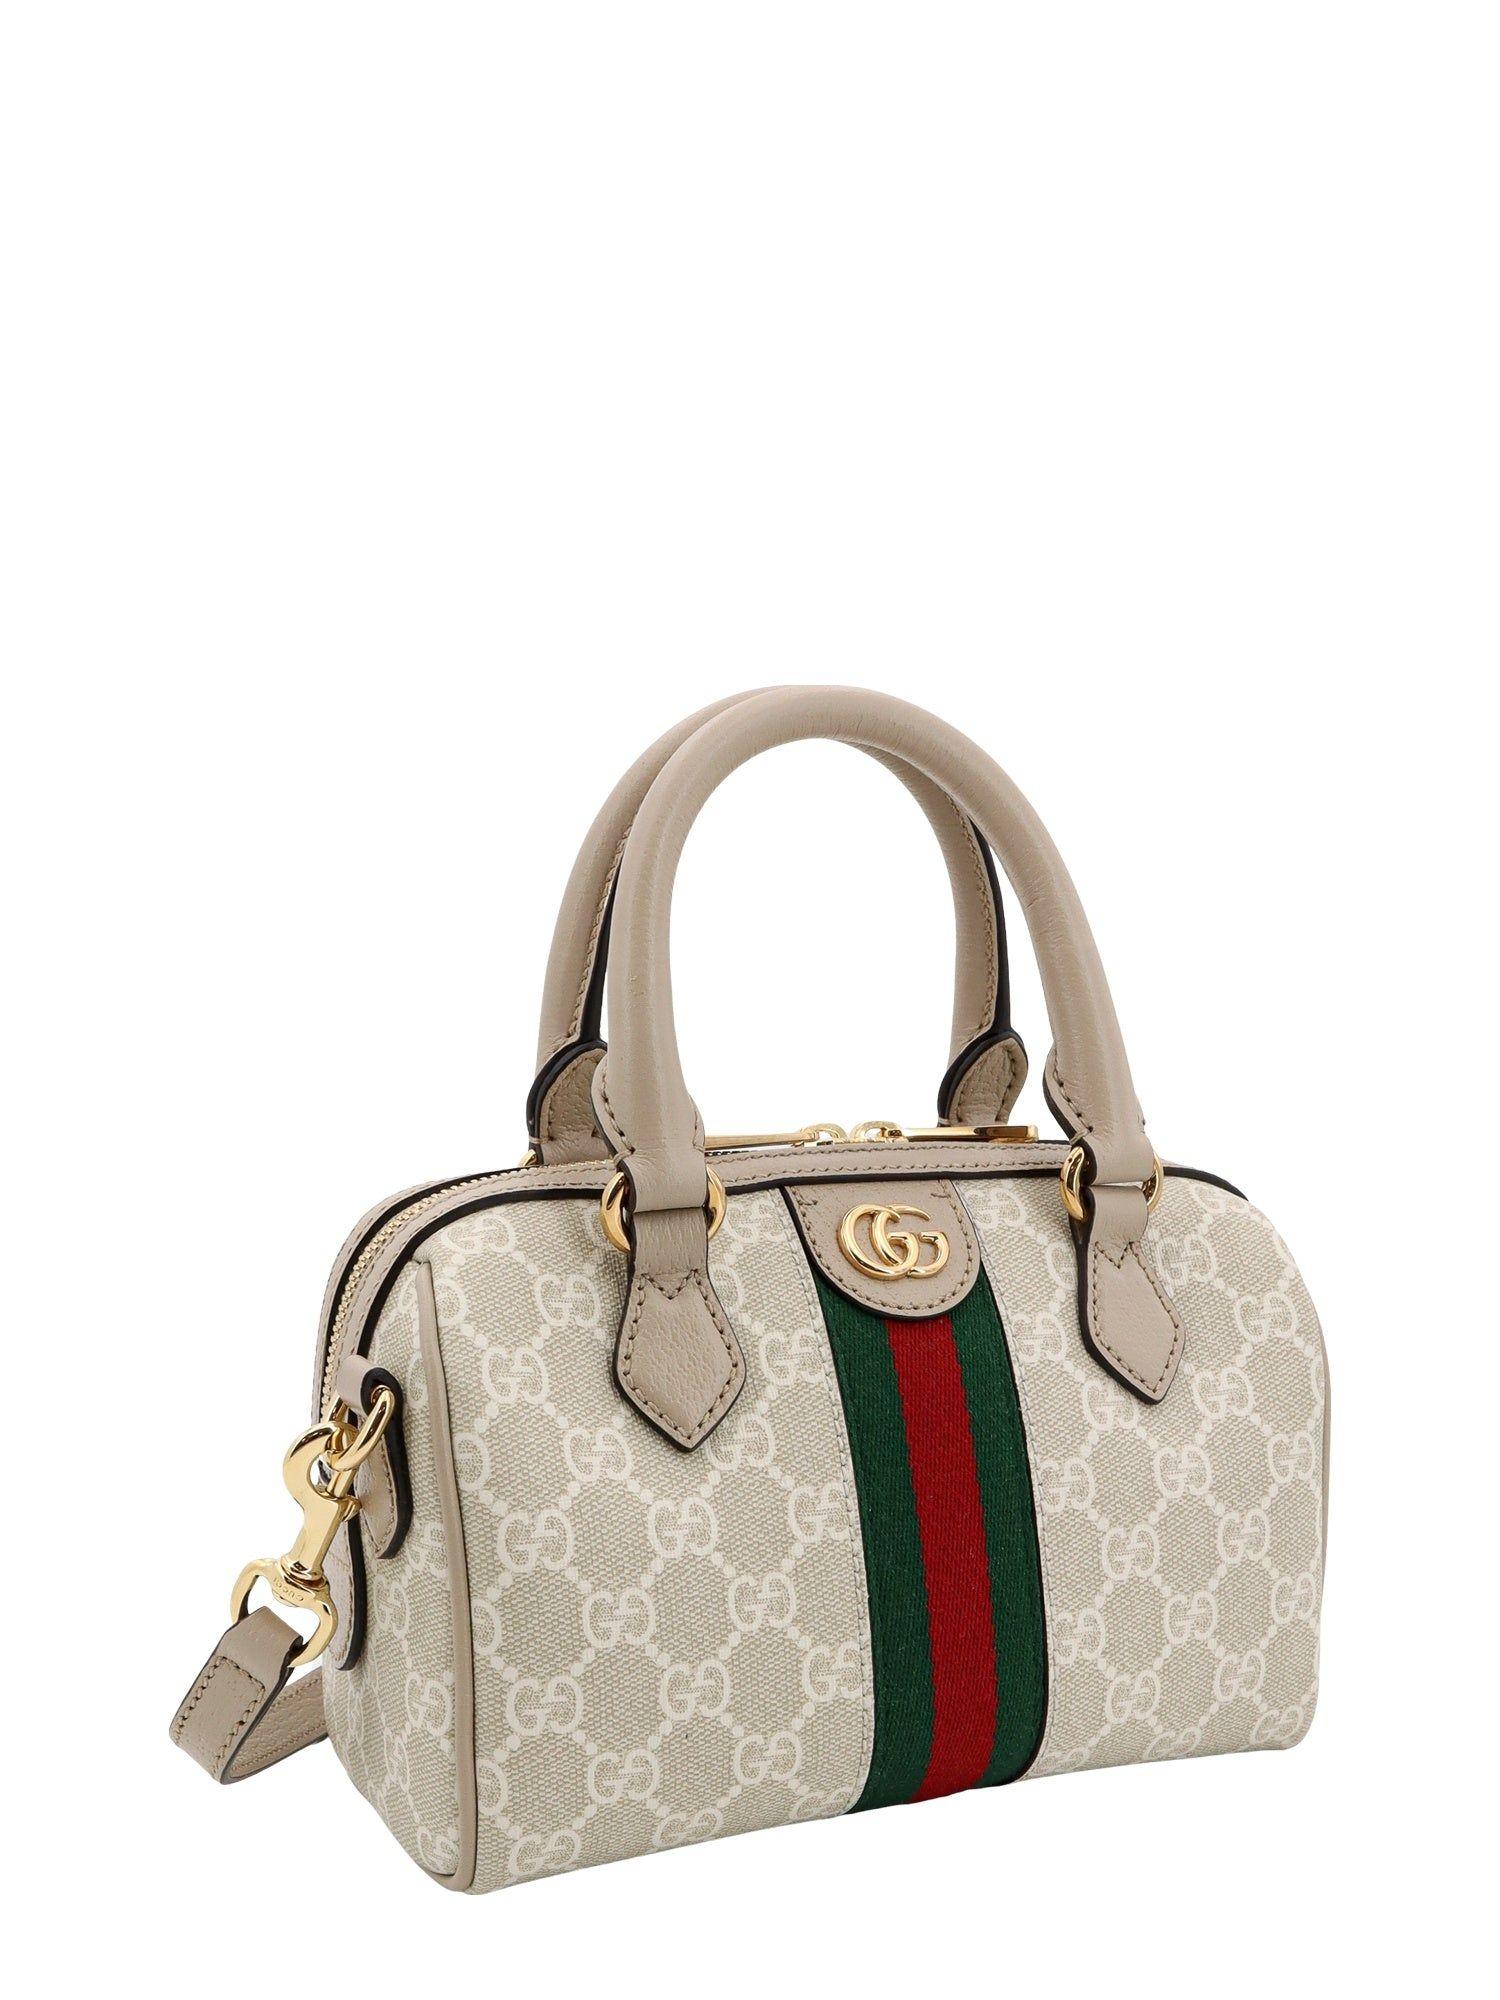 Gucci Handbag in Metallic | Lyst